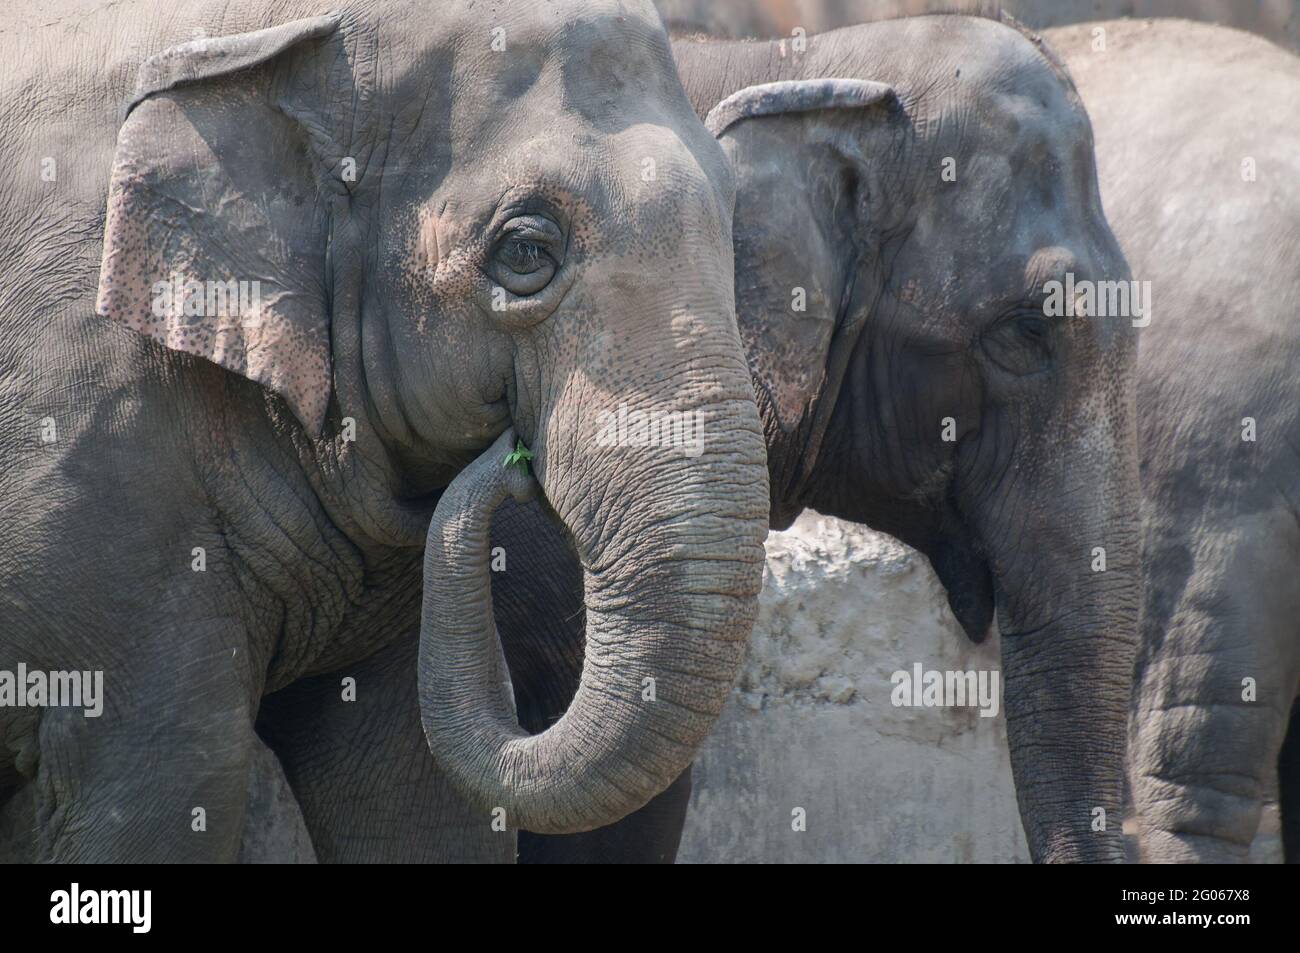 Nice group of elephants eating vegetables, Kolkata, West Bengal, India. Outdoor stock image. Stock Photo